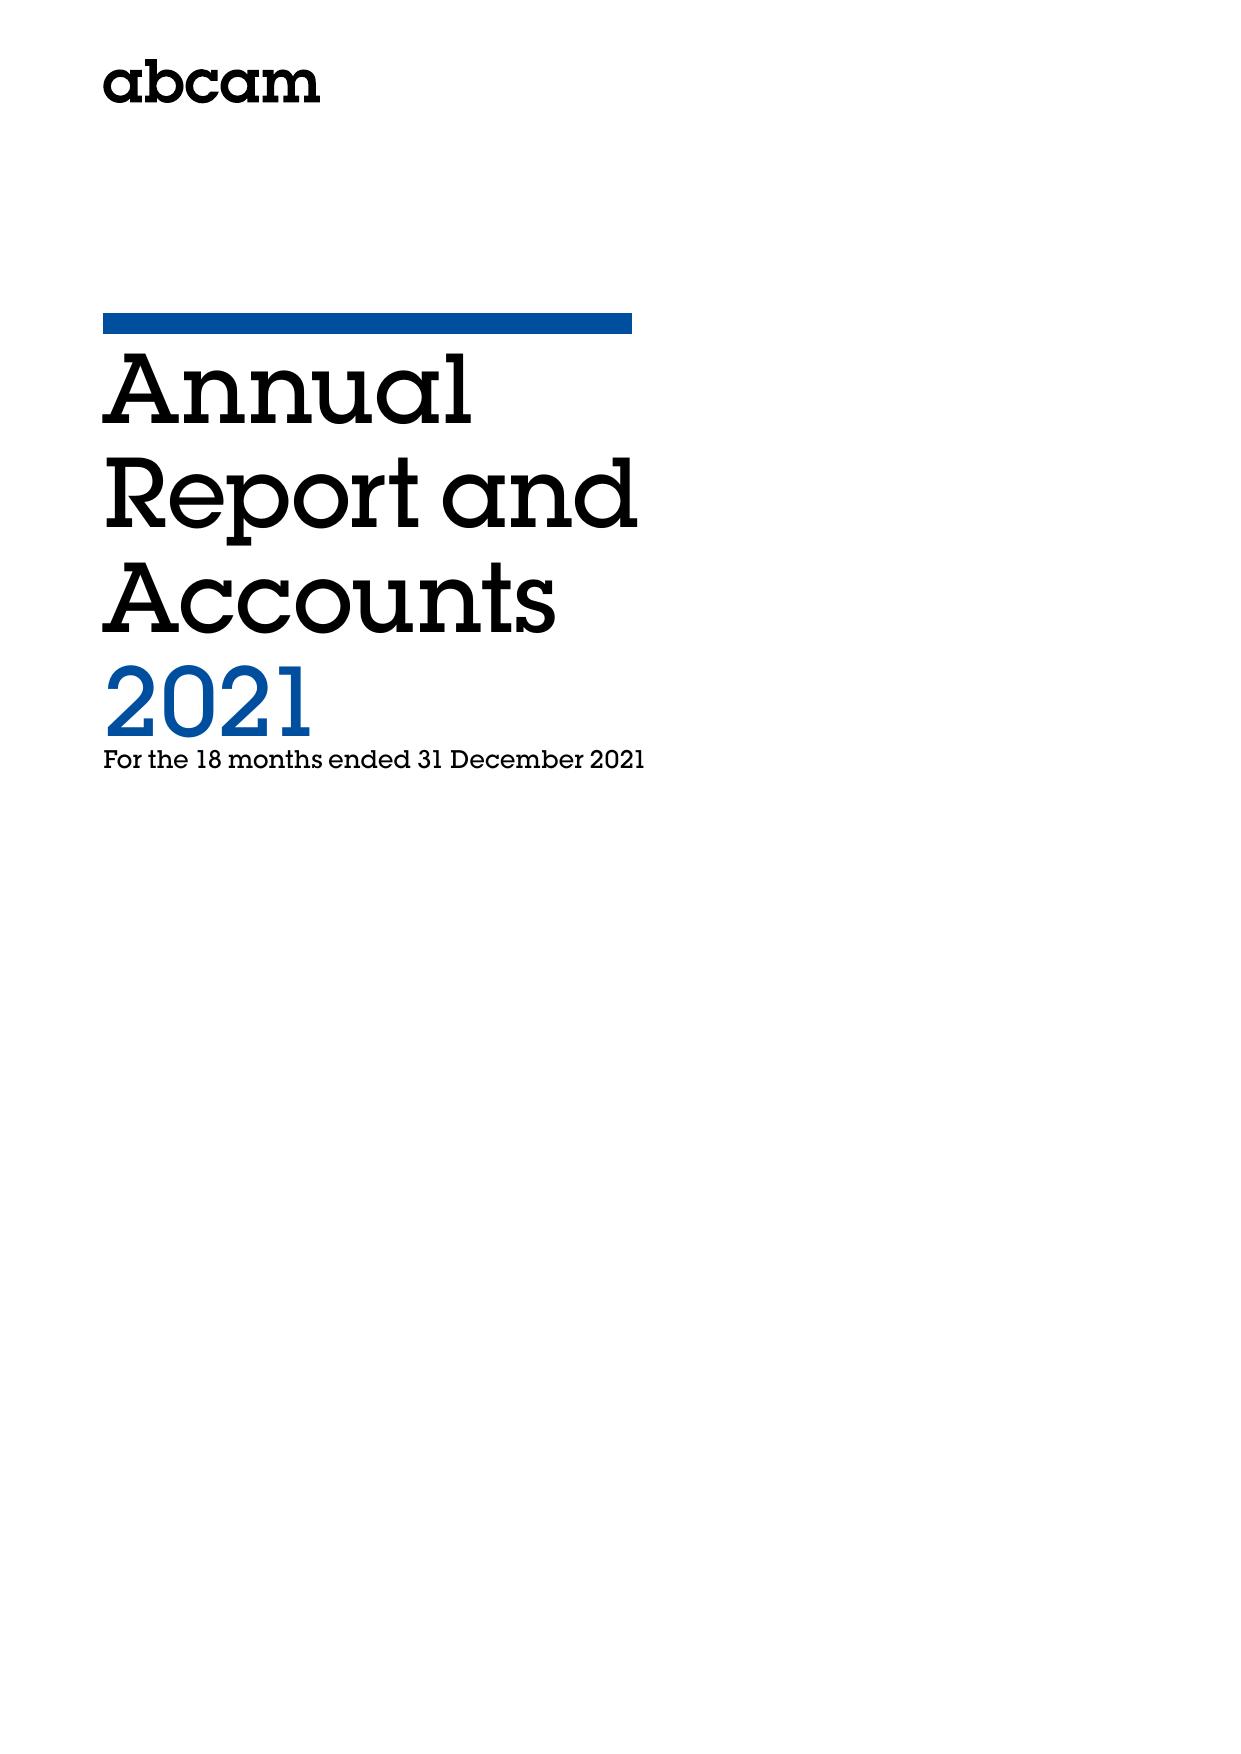 AJAXSURF 2022 Annual Report